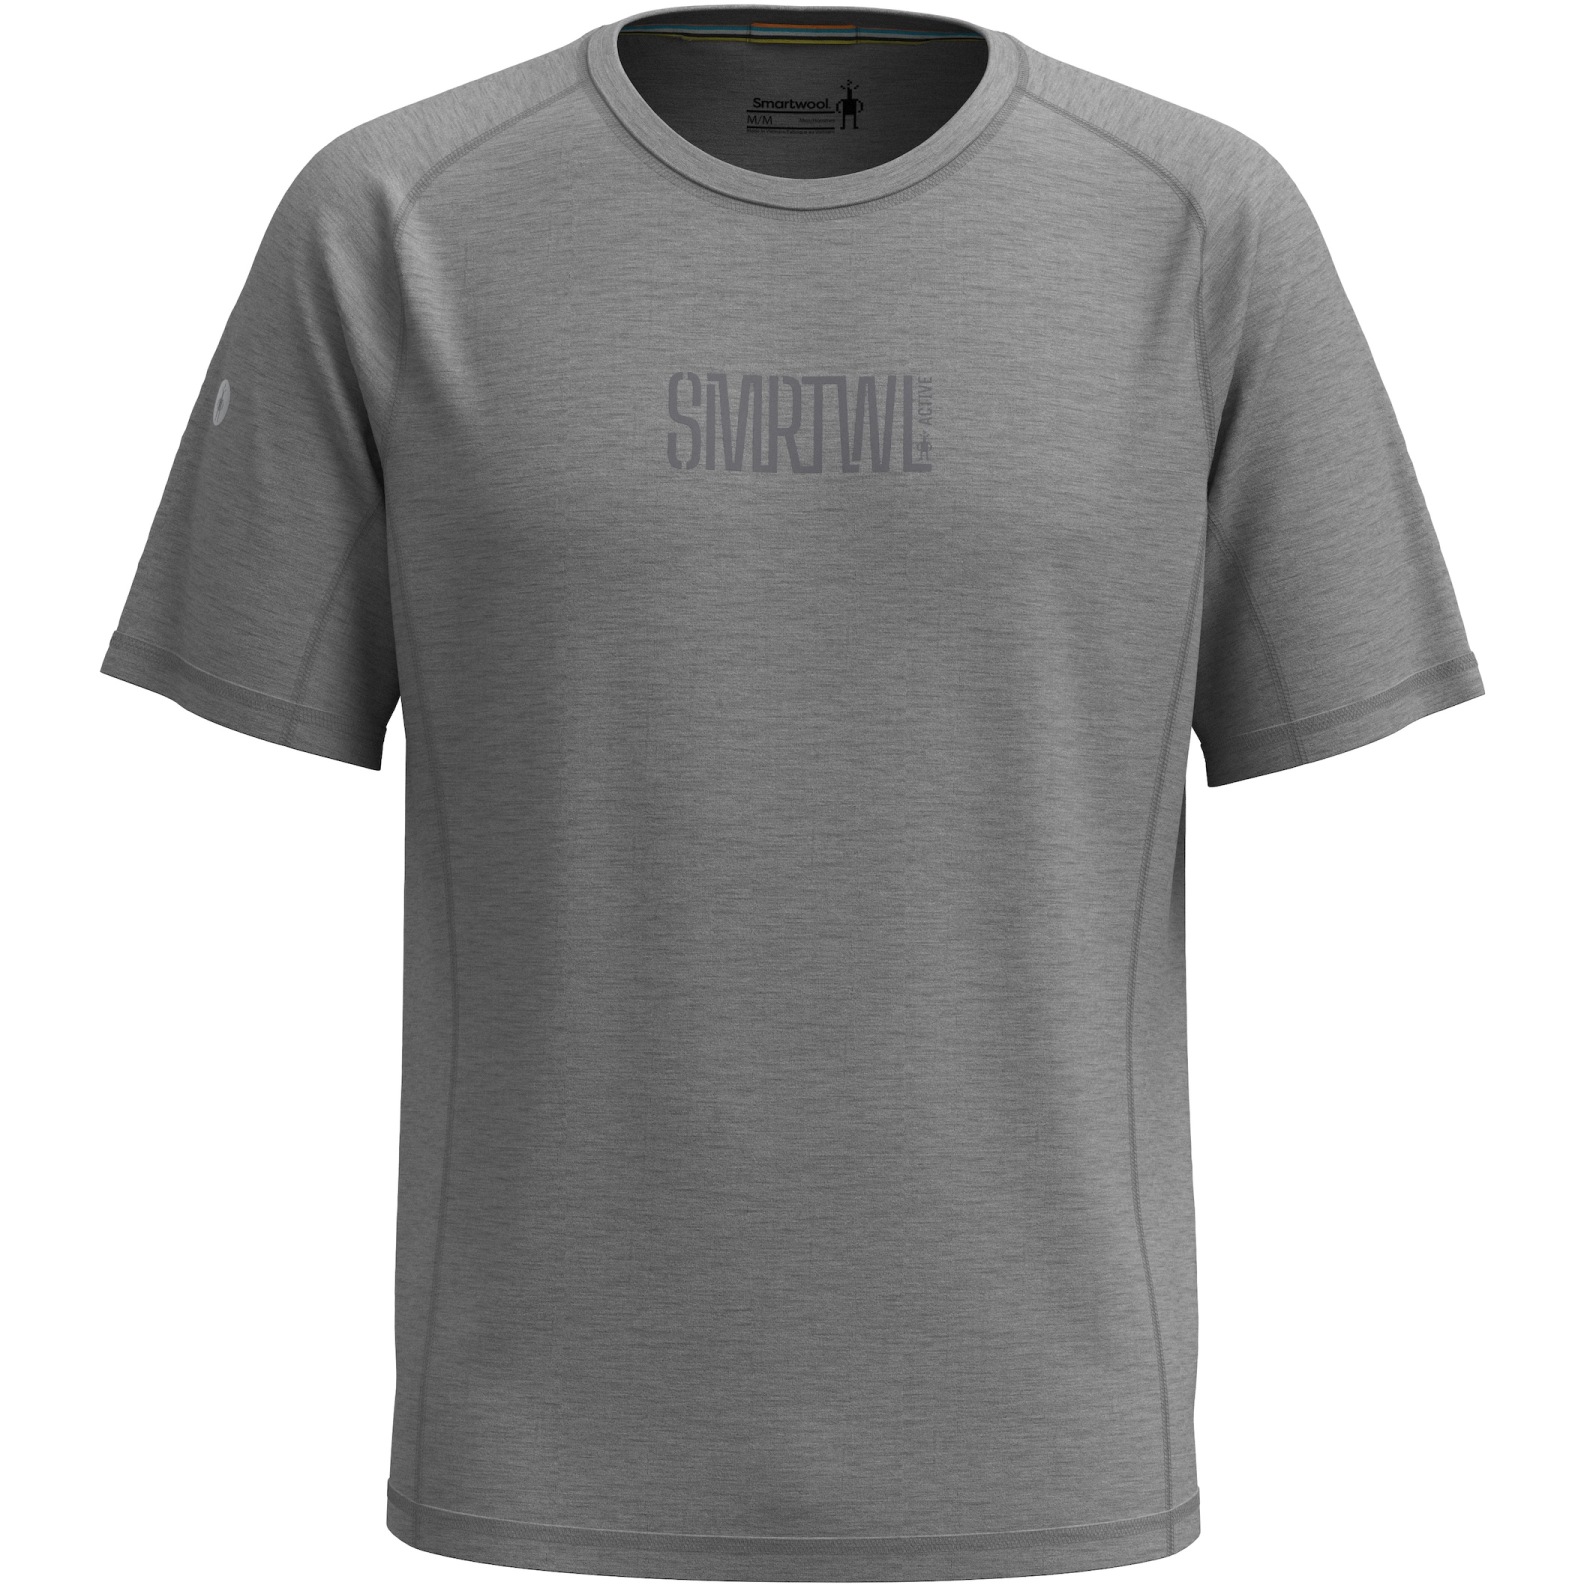 Foto de SmartWool Camiseta de Manga Corta Hombre - Active Ultralite Graphic - A85 light gray heather / medium gray heather